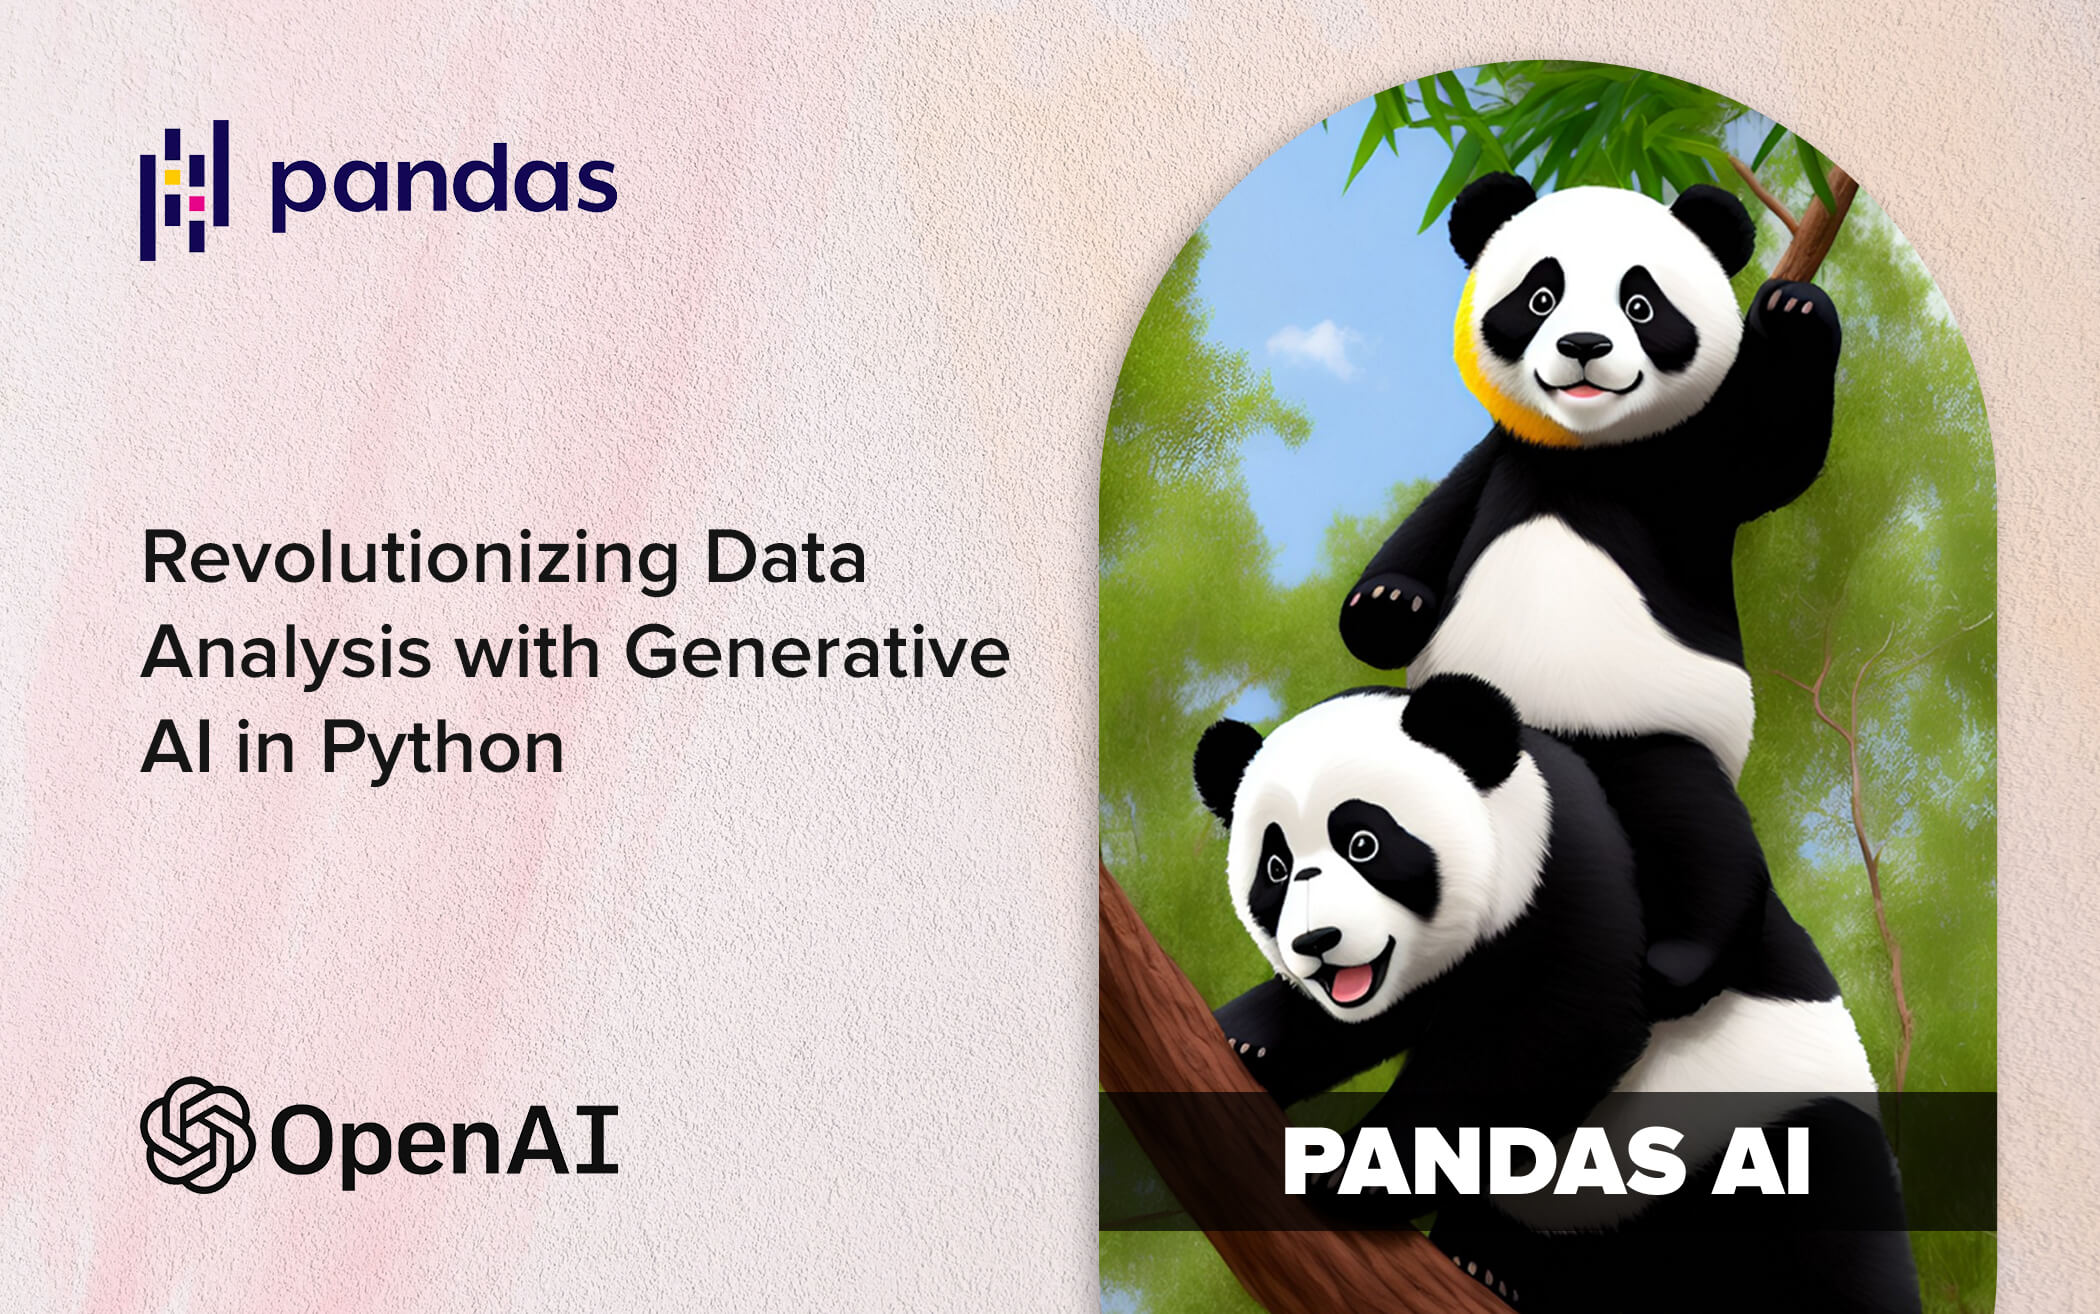 Pandas AI: Revolutionizing Data Analysis with Generative AI in Python